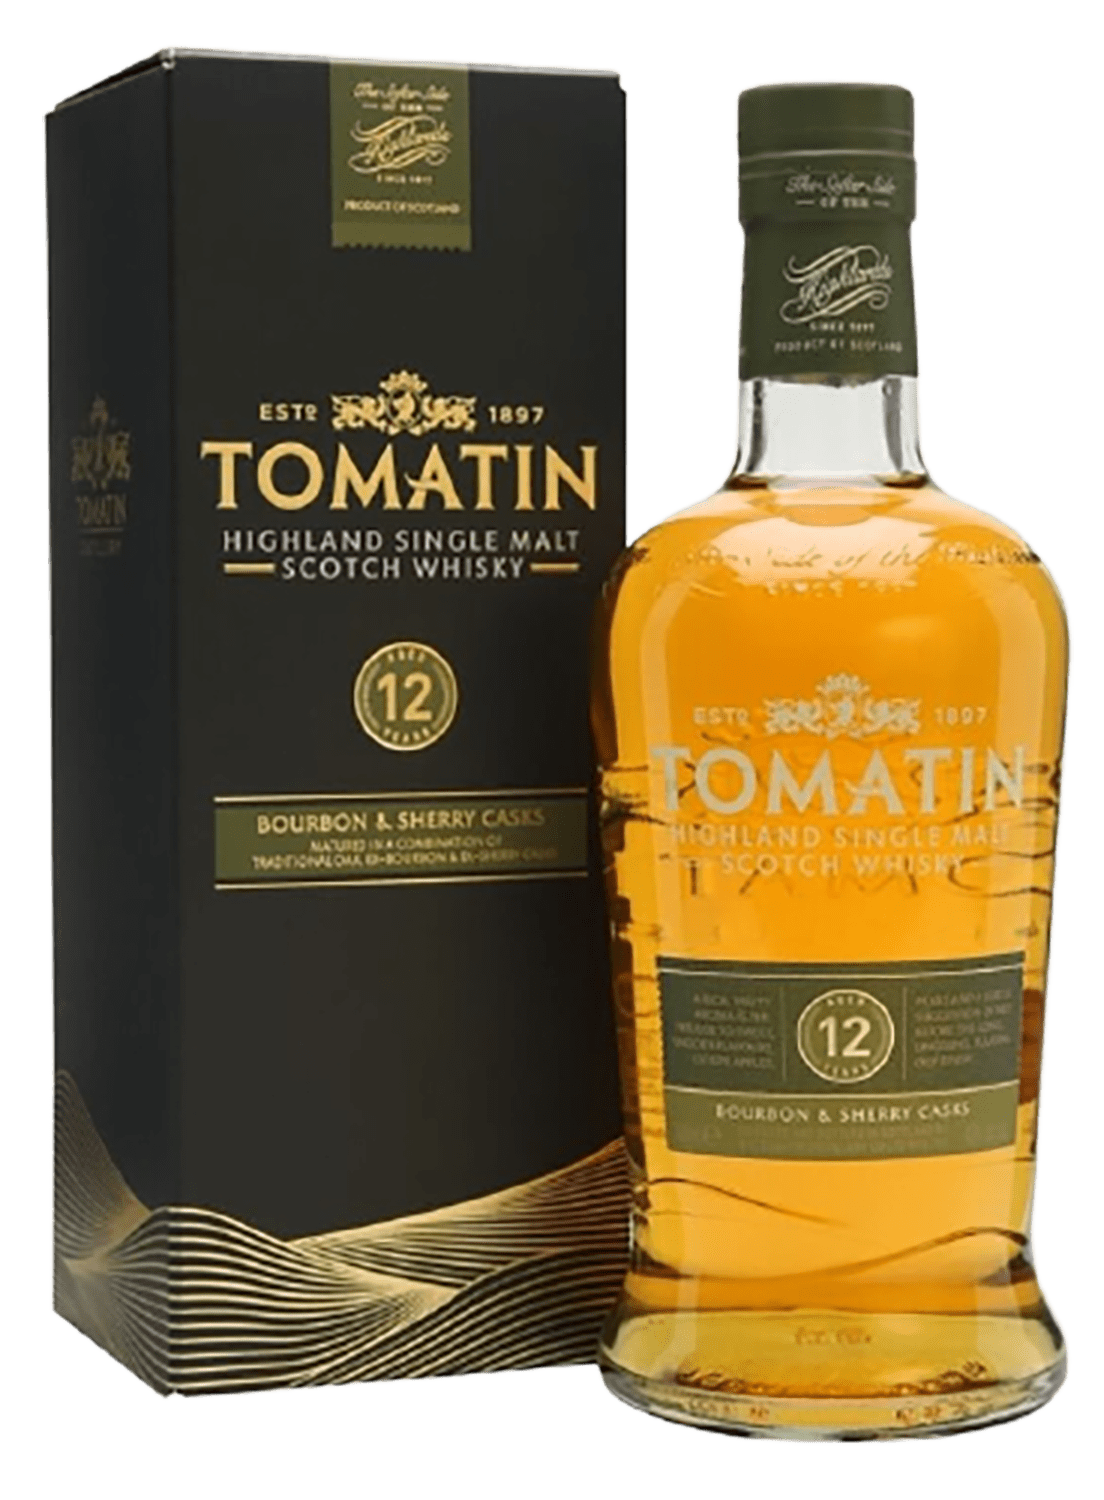 Tomatin Highland Single Malt Scotch Whisky 12 y.o. (gift box) aberfeldy 12 years old highland single malt scotch whisky gift box